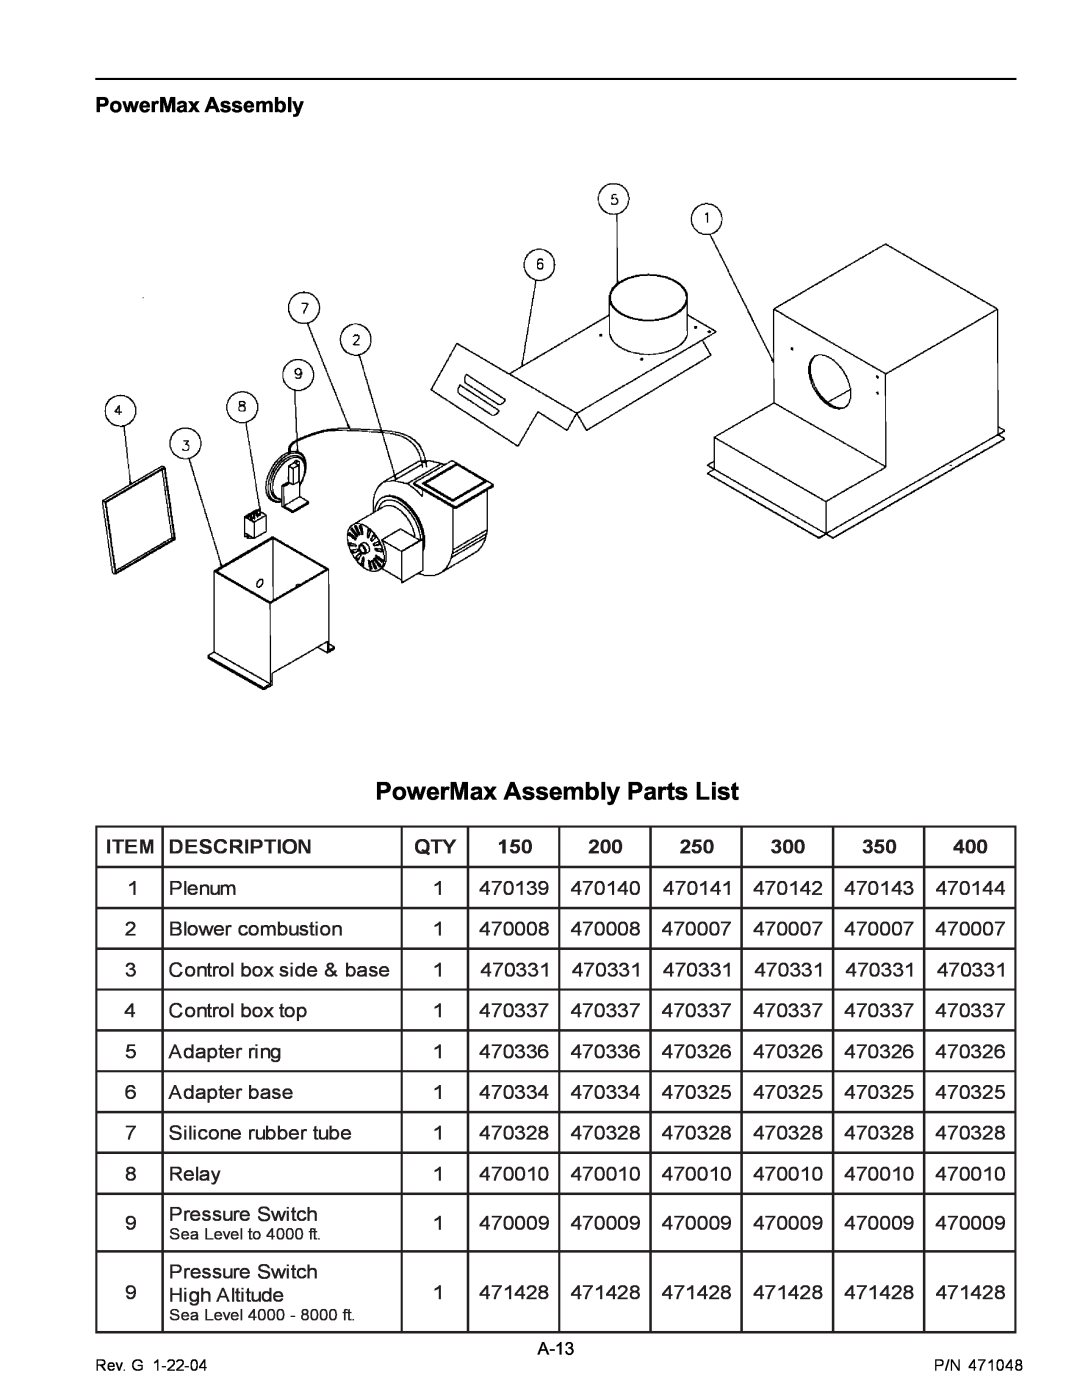 Pentair MiniMax Plus HP Series installation manual PowerMax Assembly Parts List, Description 